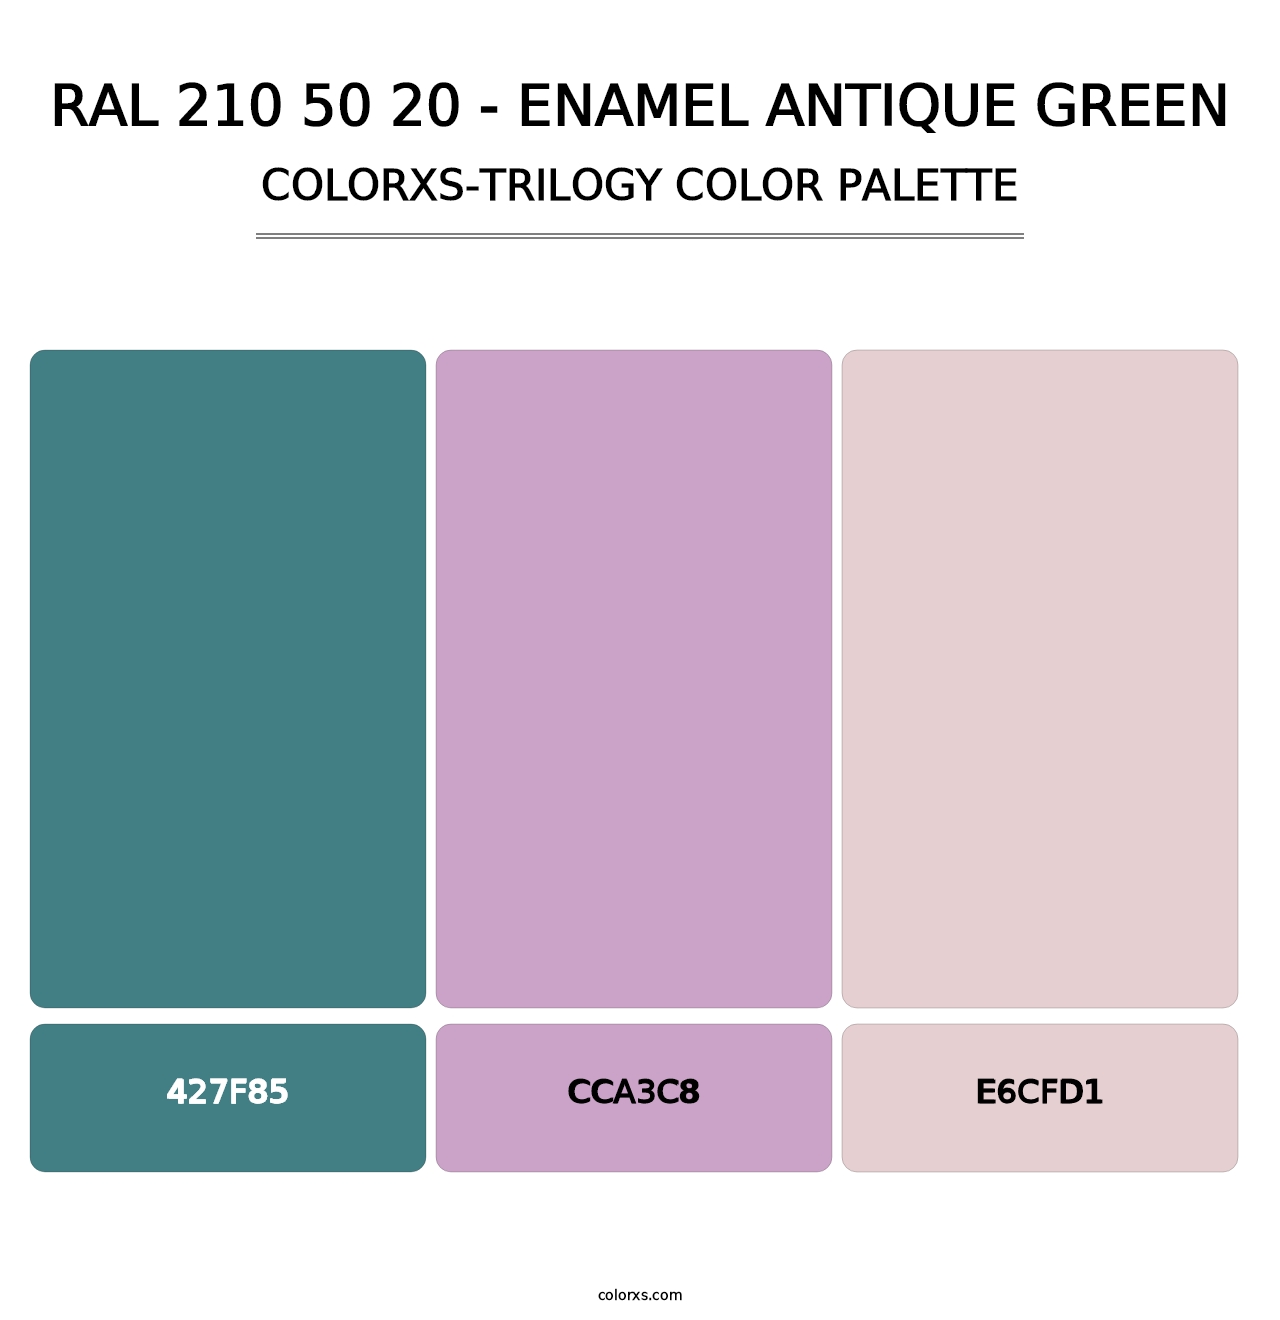 RAL 210 50 20 - Enamel Antique Green - Colorxs Trilogy Palette